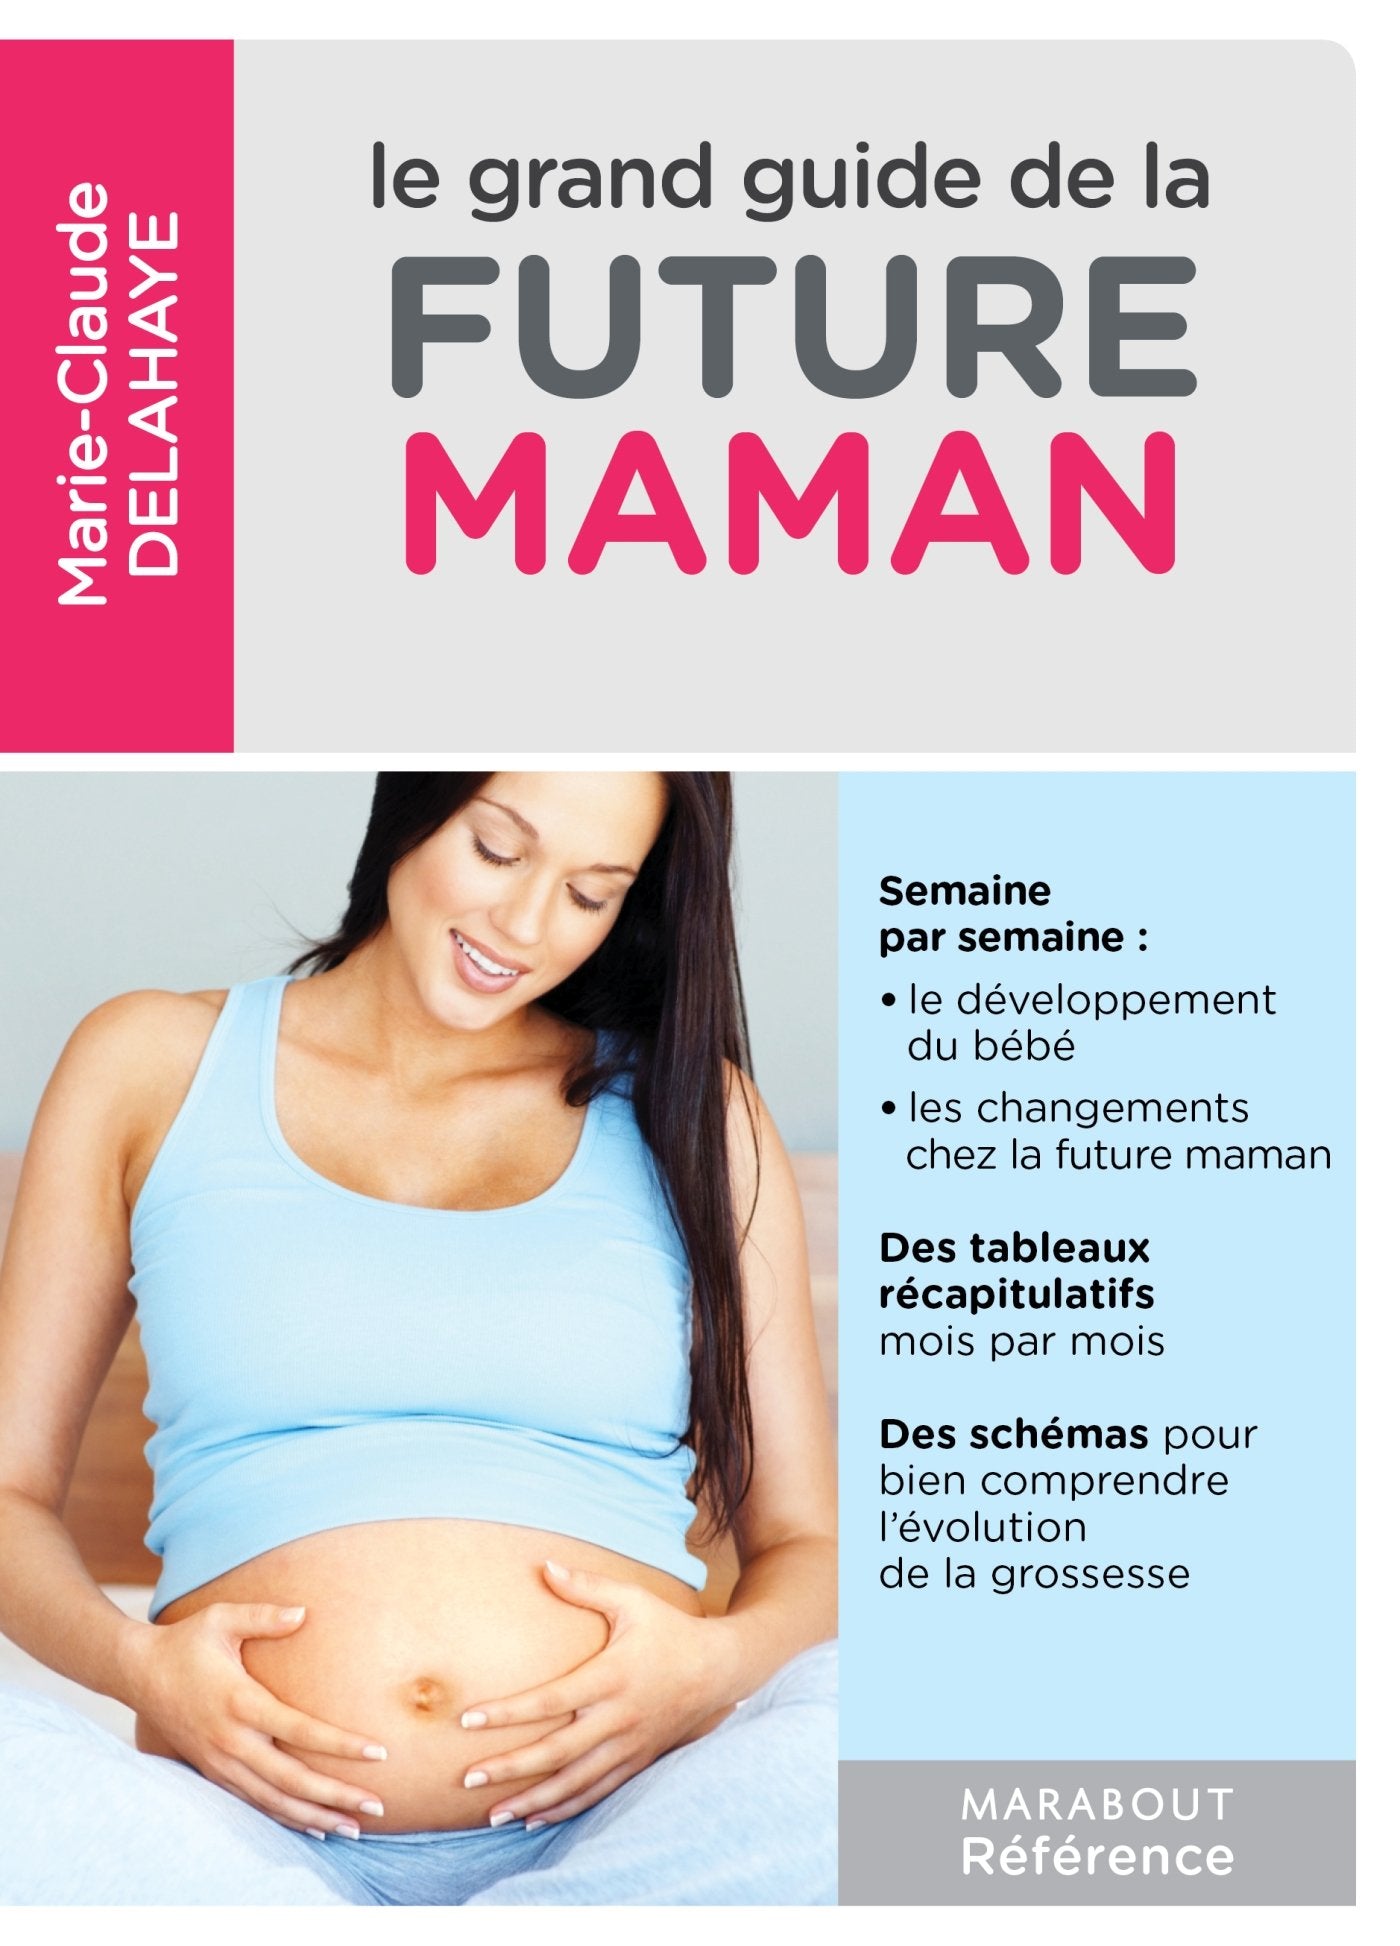 Le grand guide de la future maman - Marie-Claude Delahaye